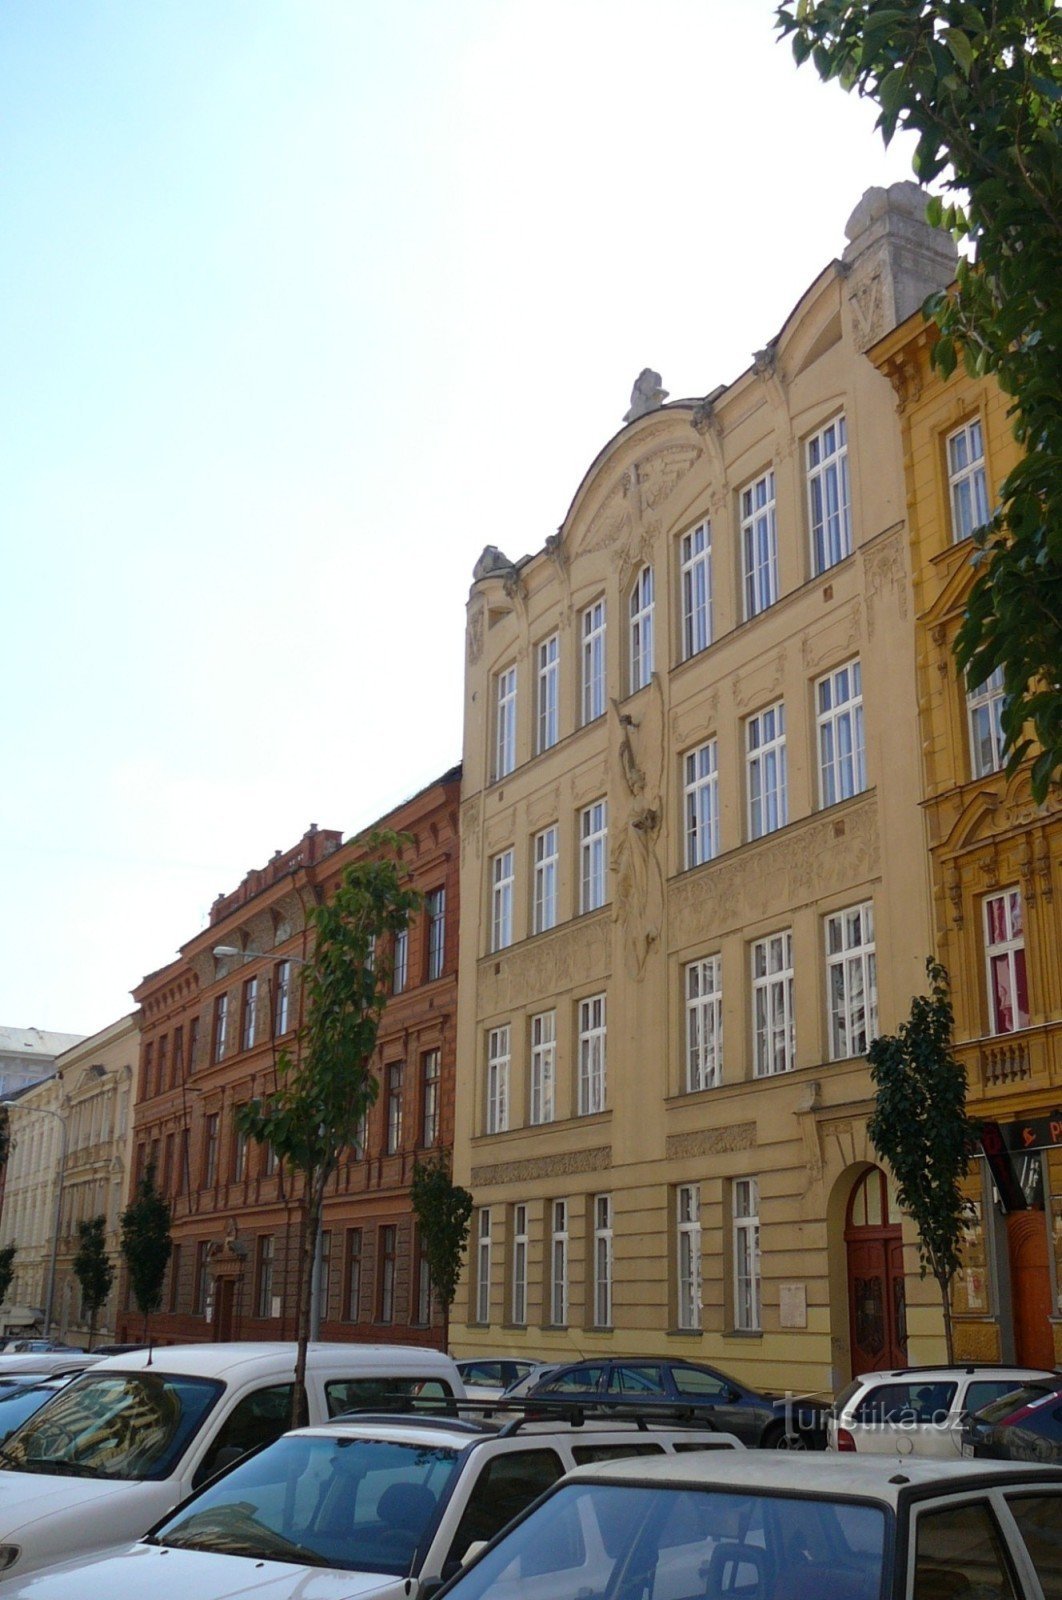 Both houses on Jaselská Street, where Jurkovič designed some of the interiors